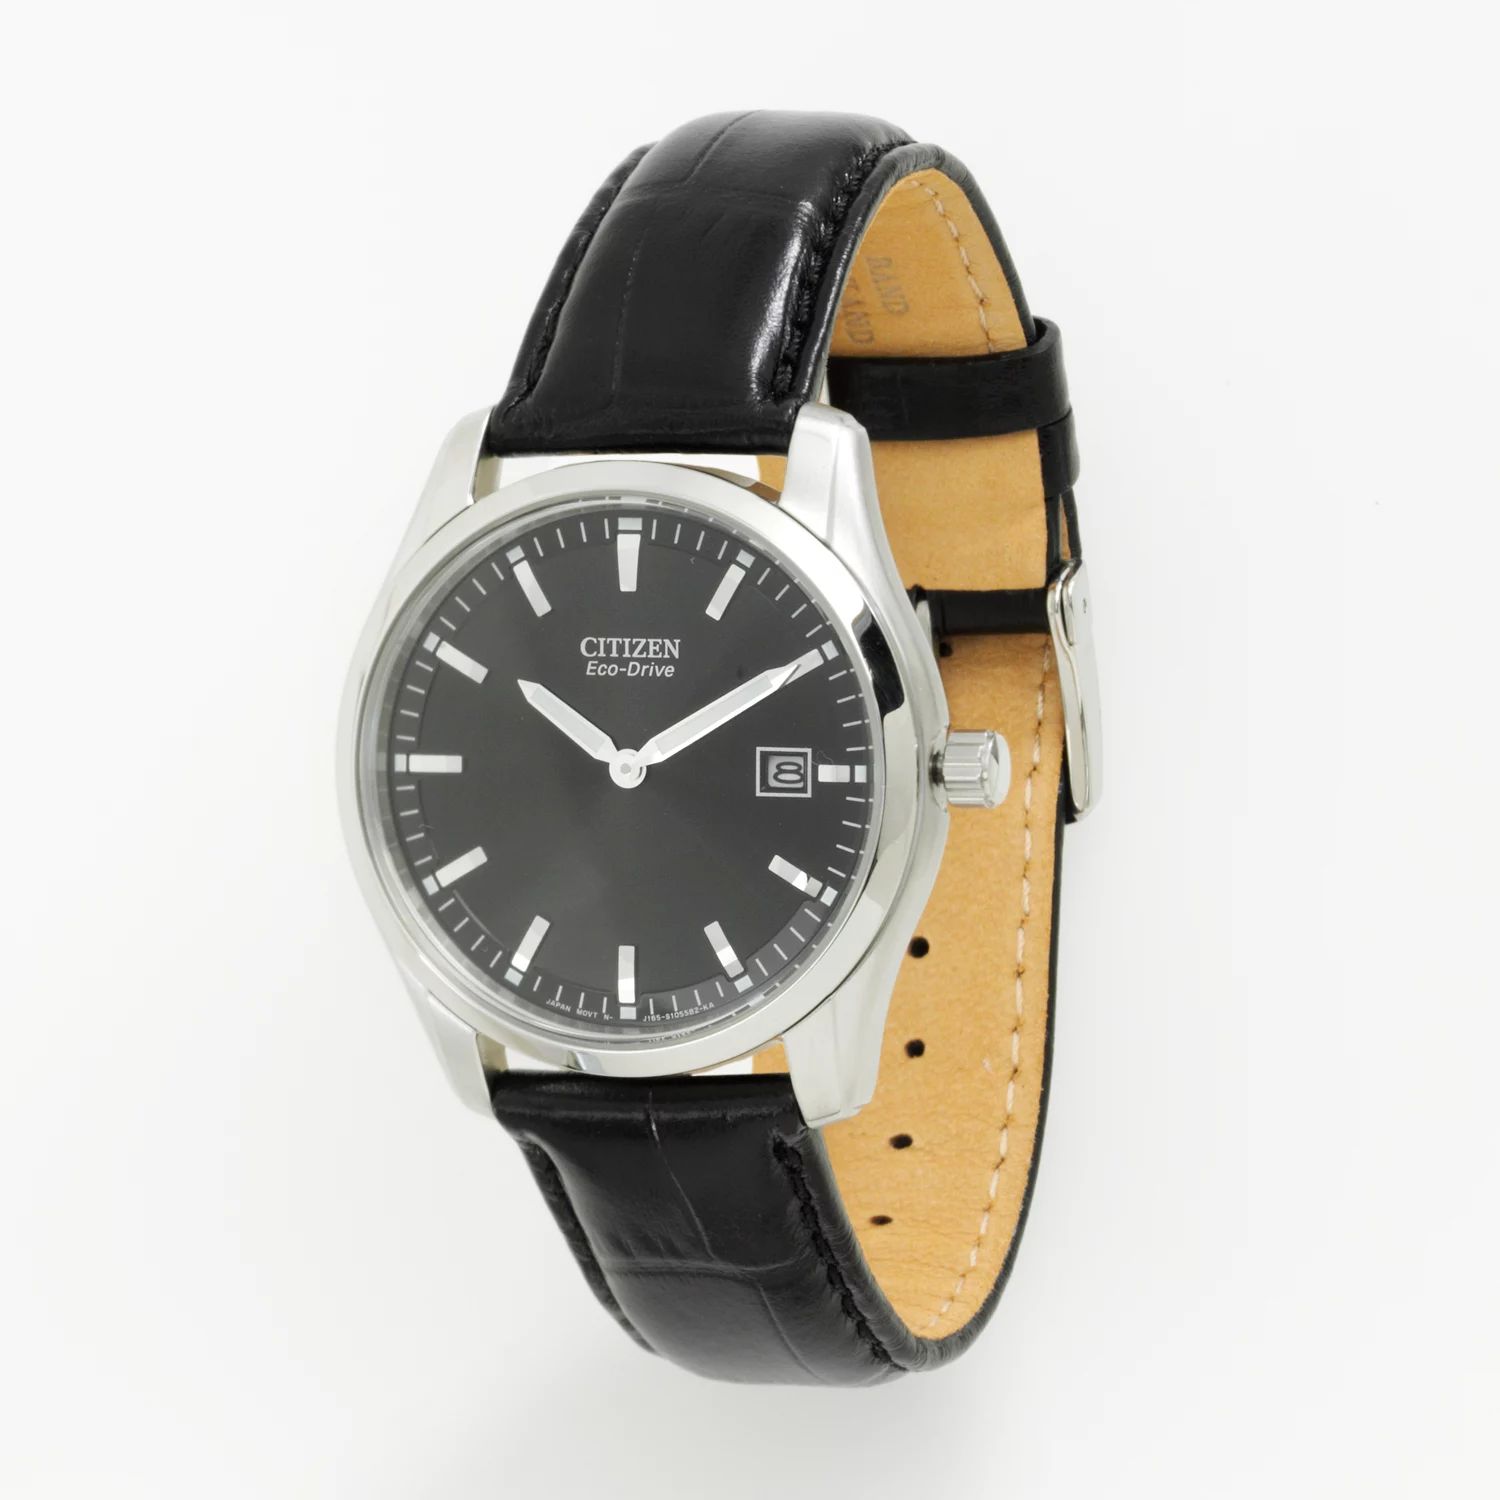 Мужские кожаные часы Citizen Eco-Drive — AU1040-08E Relic by Fossil